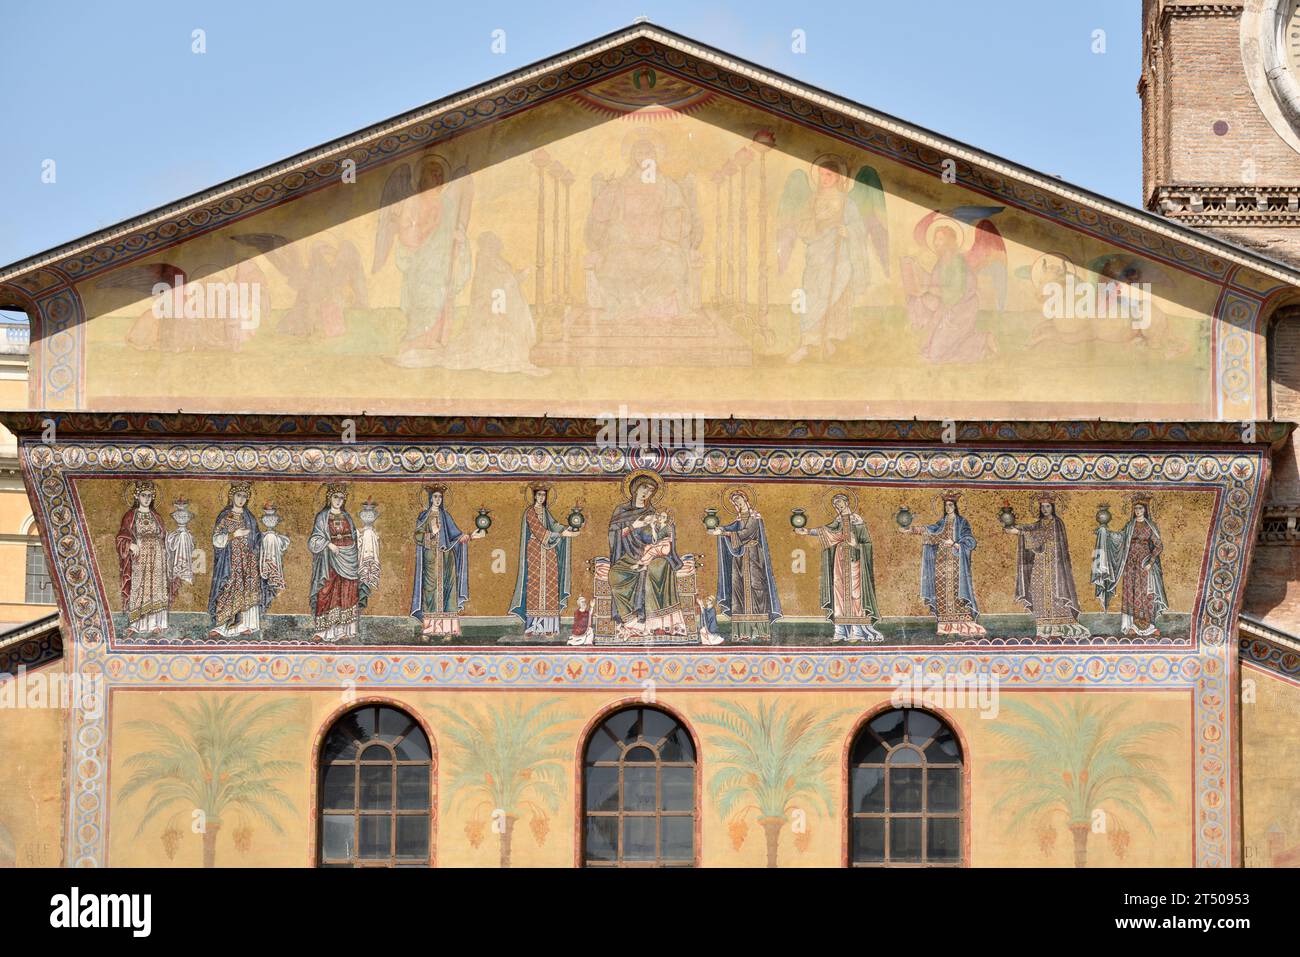 Medieval mosaic on the facade, Basilica di Santa Maria in Trastevere, Rome, Italy Stock Photo